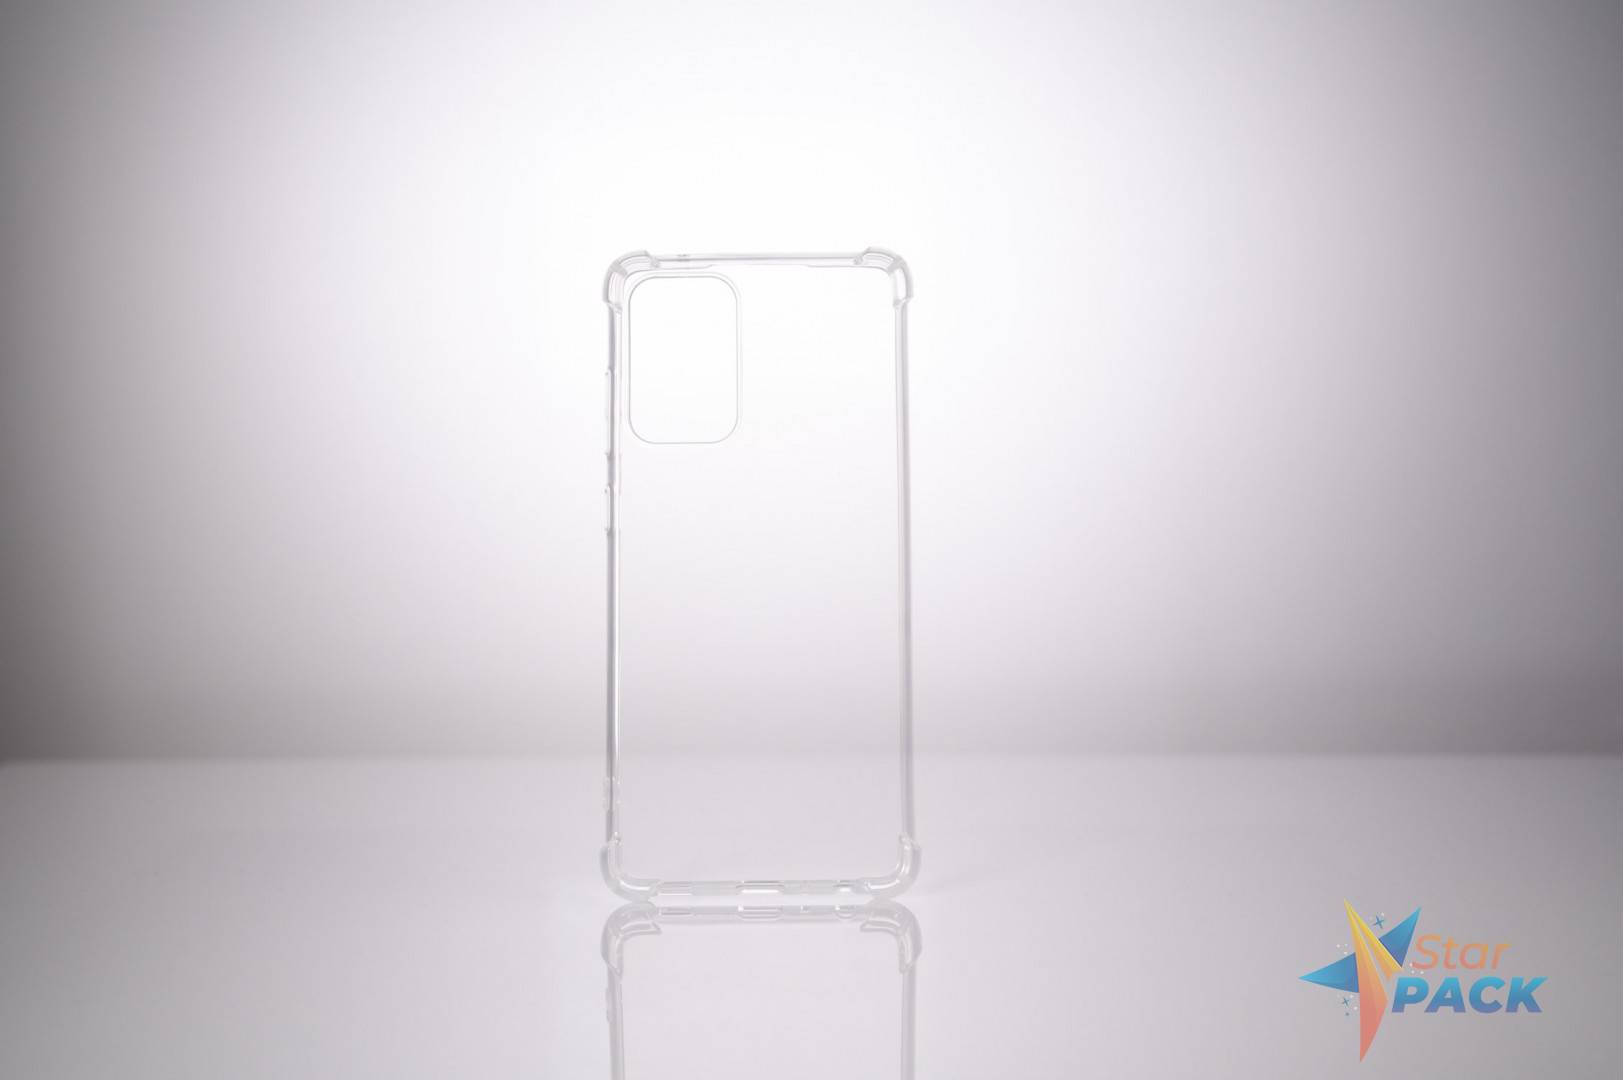 Husa Samsung Galaxy A72 Spacer, transparenta, grosime 1.5mm, protectie suplimentara antisoc la colturi, material flexibil TPU